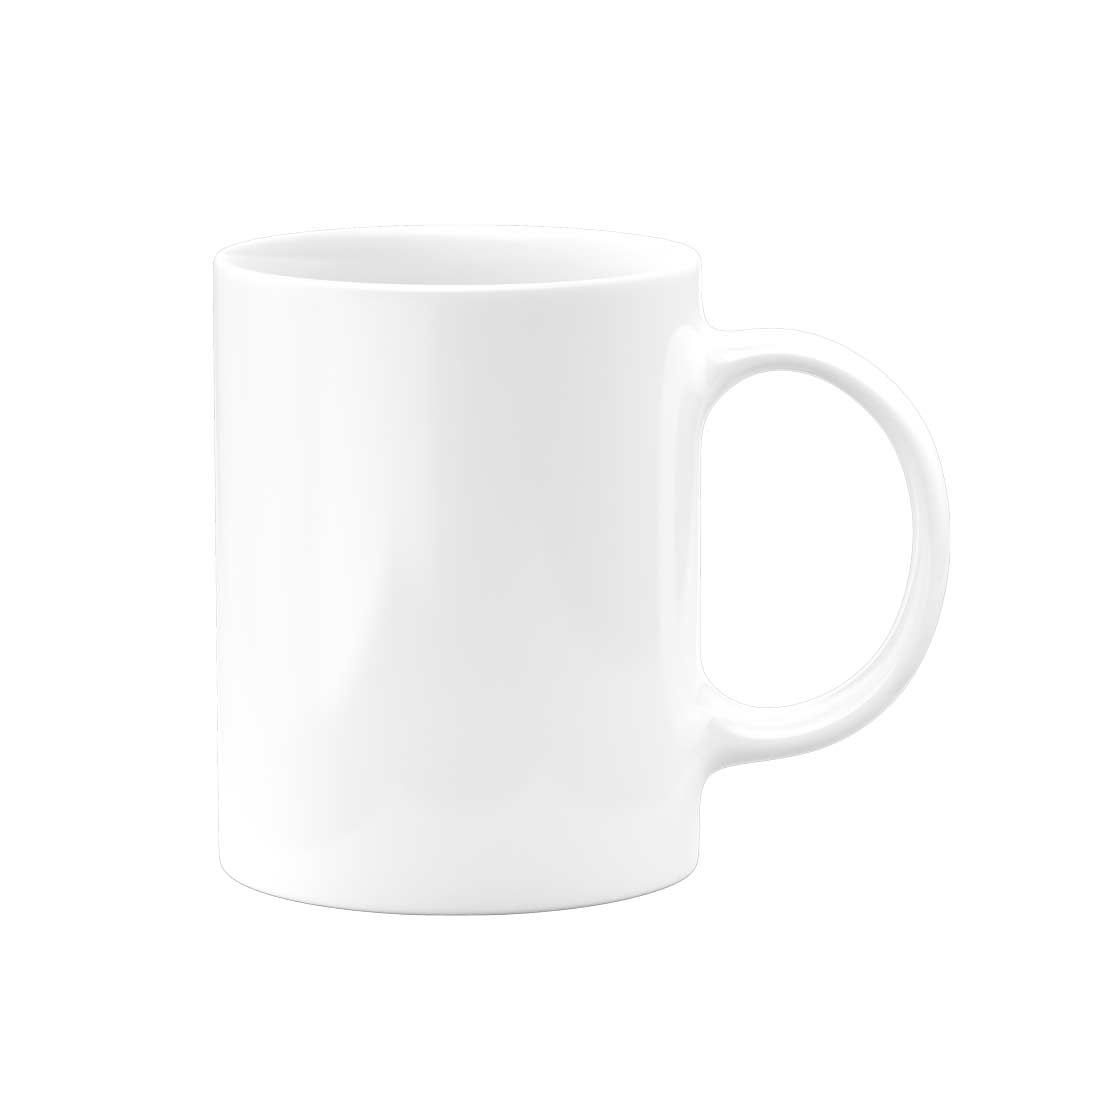 Premium blank mugs wholesale in Unique and Trendy Designs